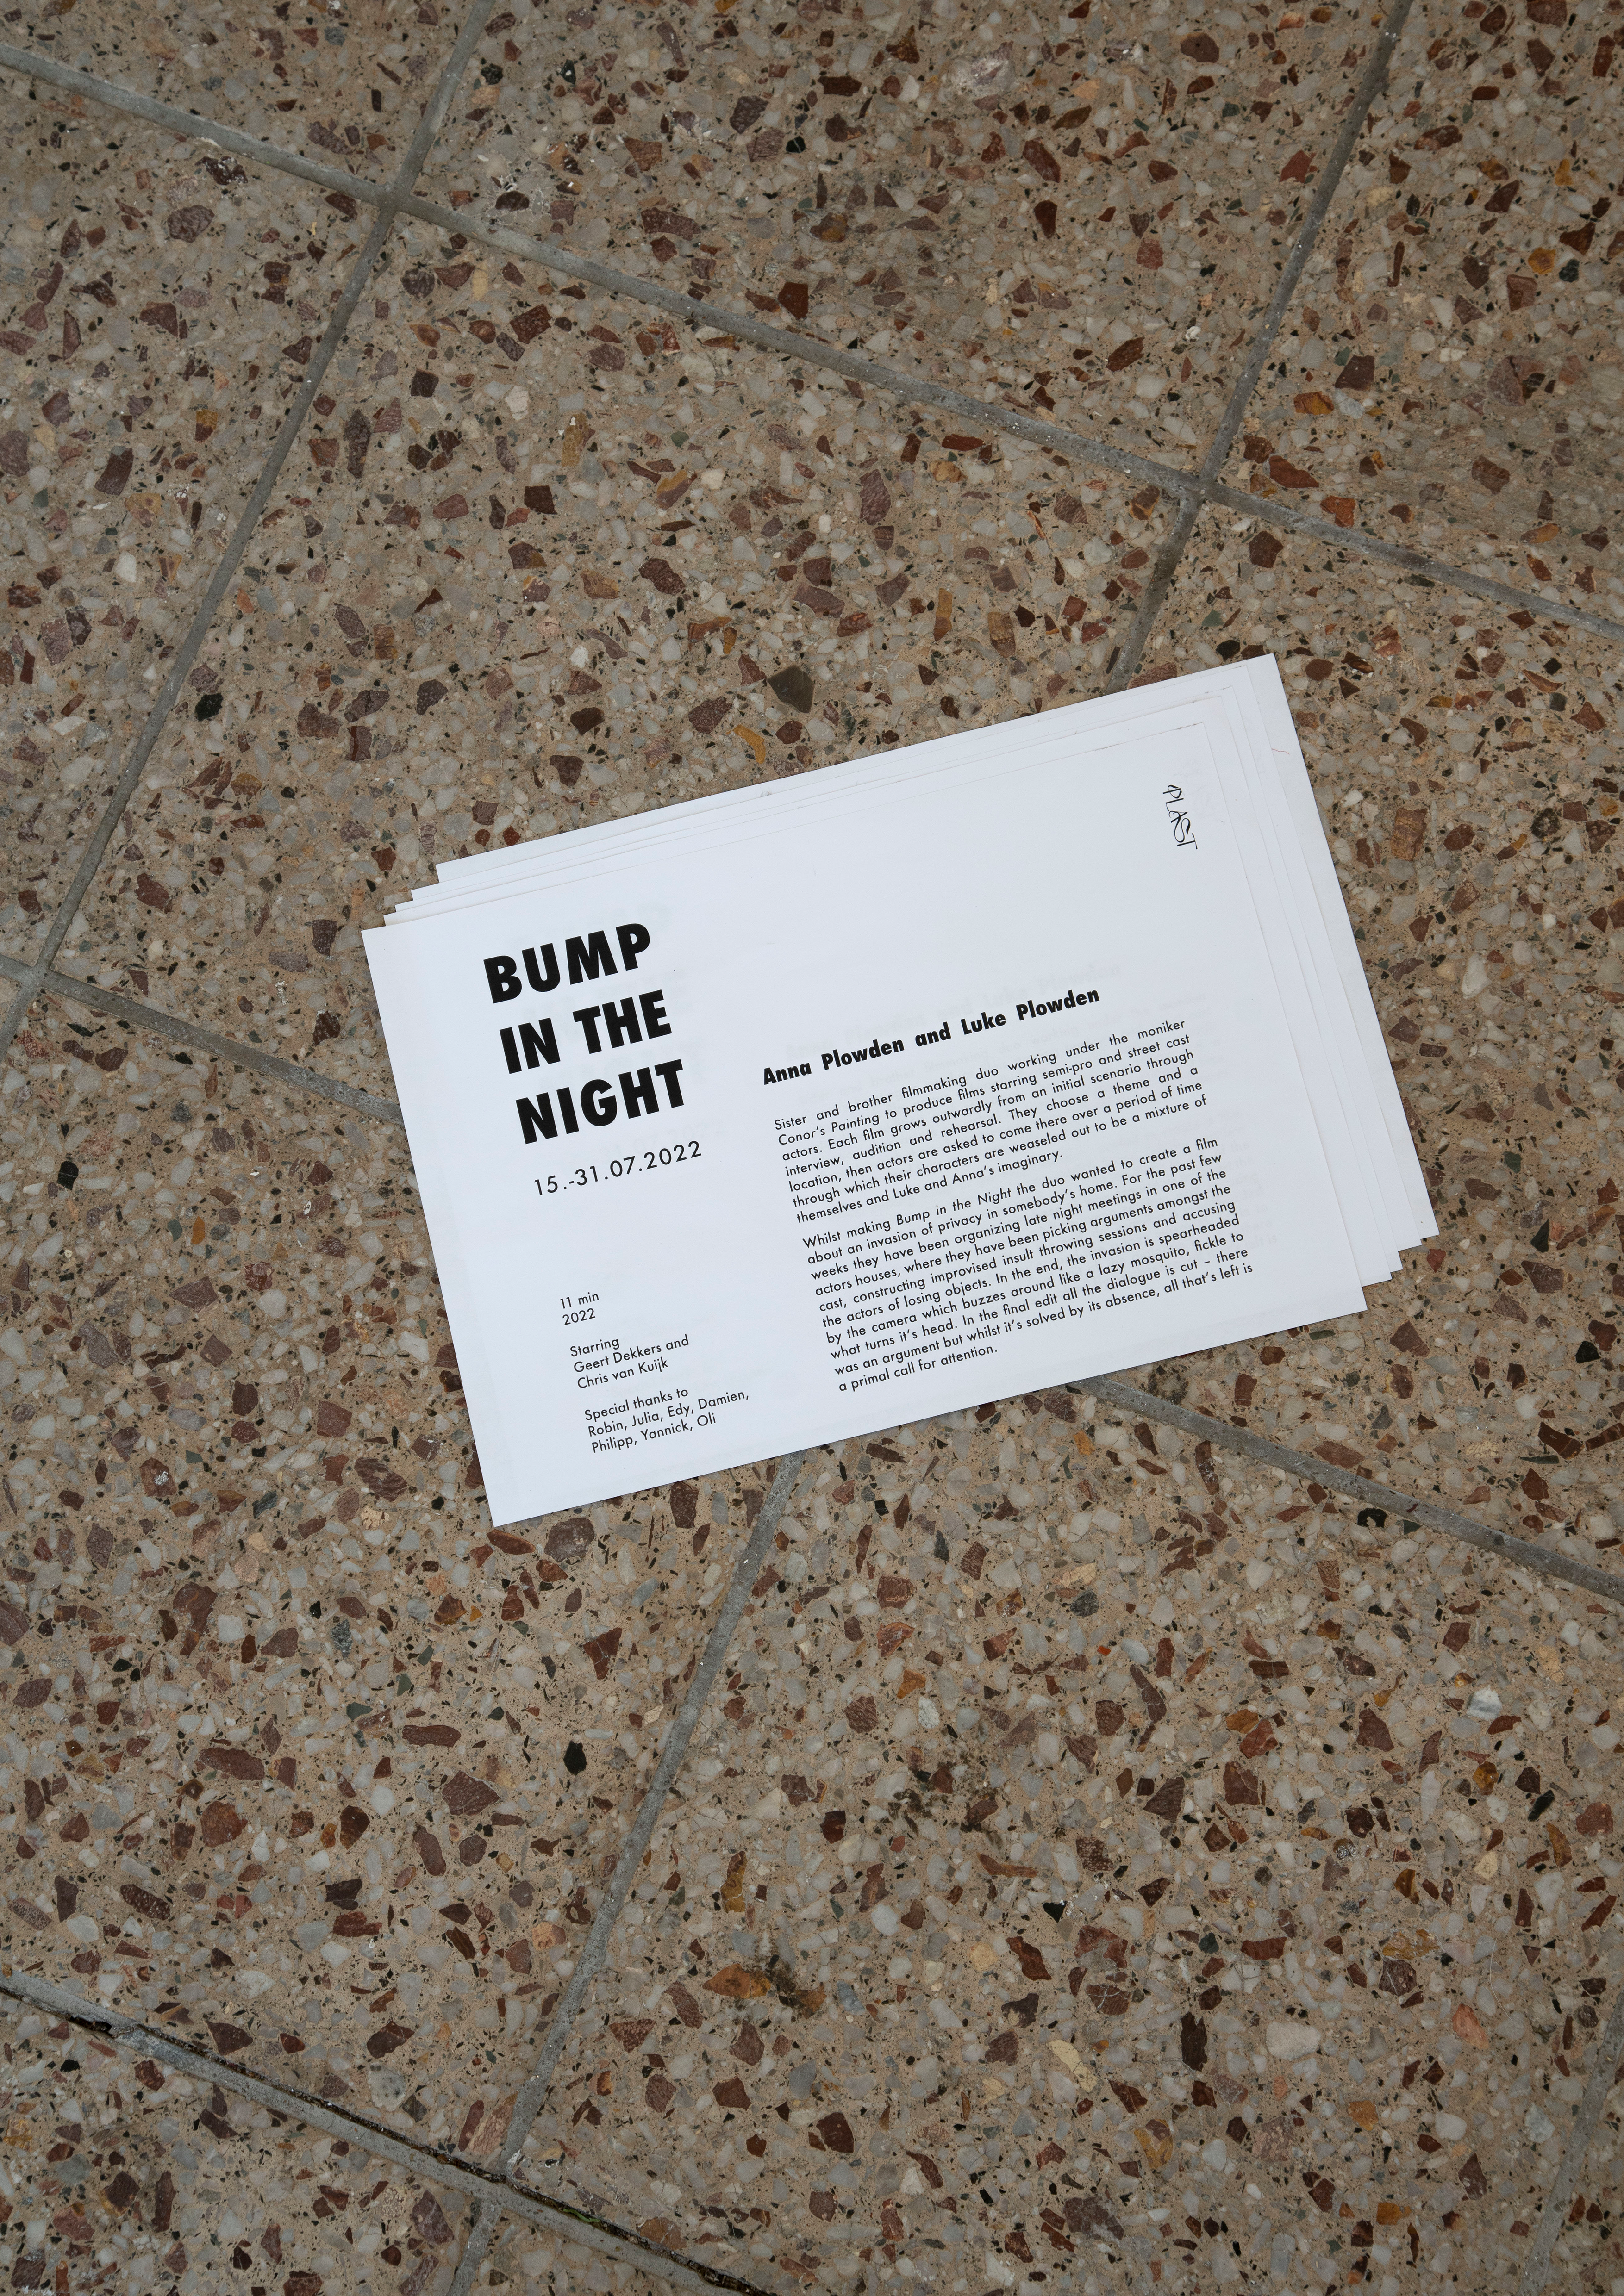 Bump in the night documentation